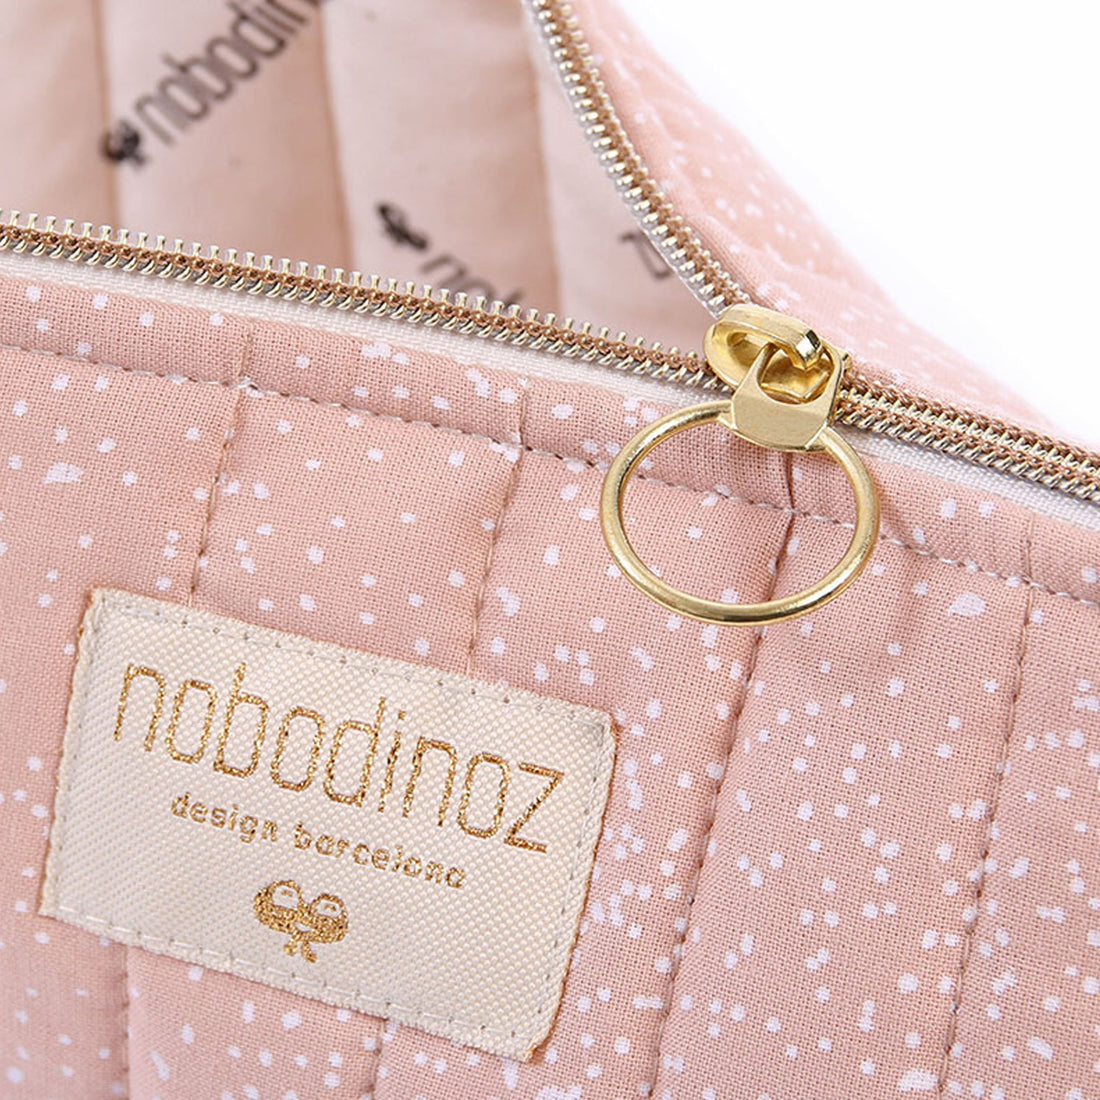 nobodinoz-holiday-vanity-case-white-bubble-misty-pink- (2)